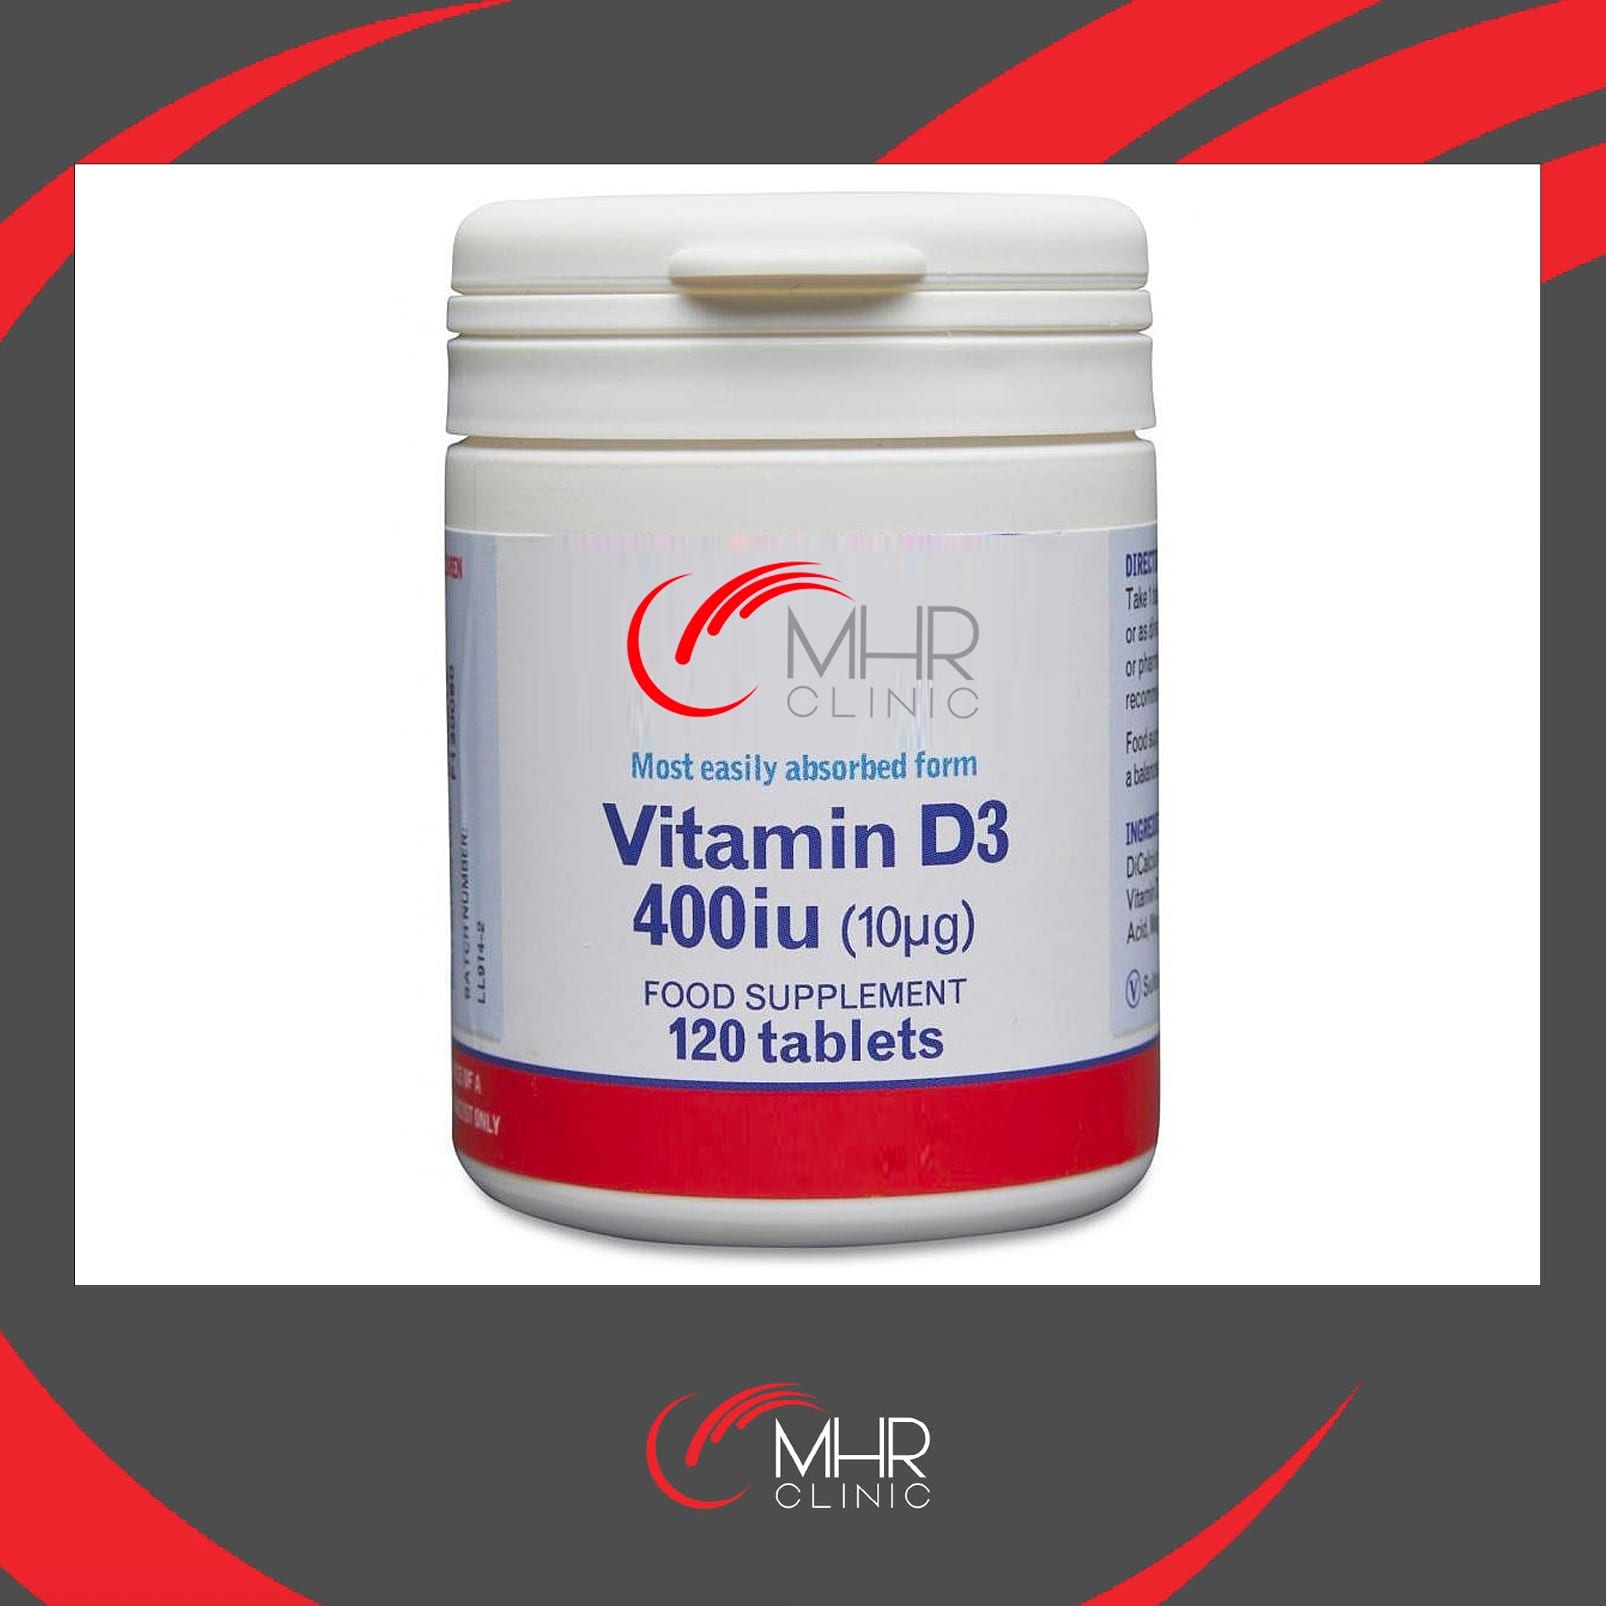 Vitamin D supplement for Hair loss